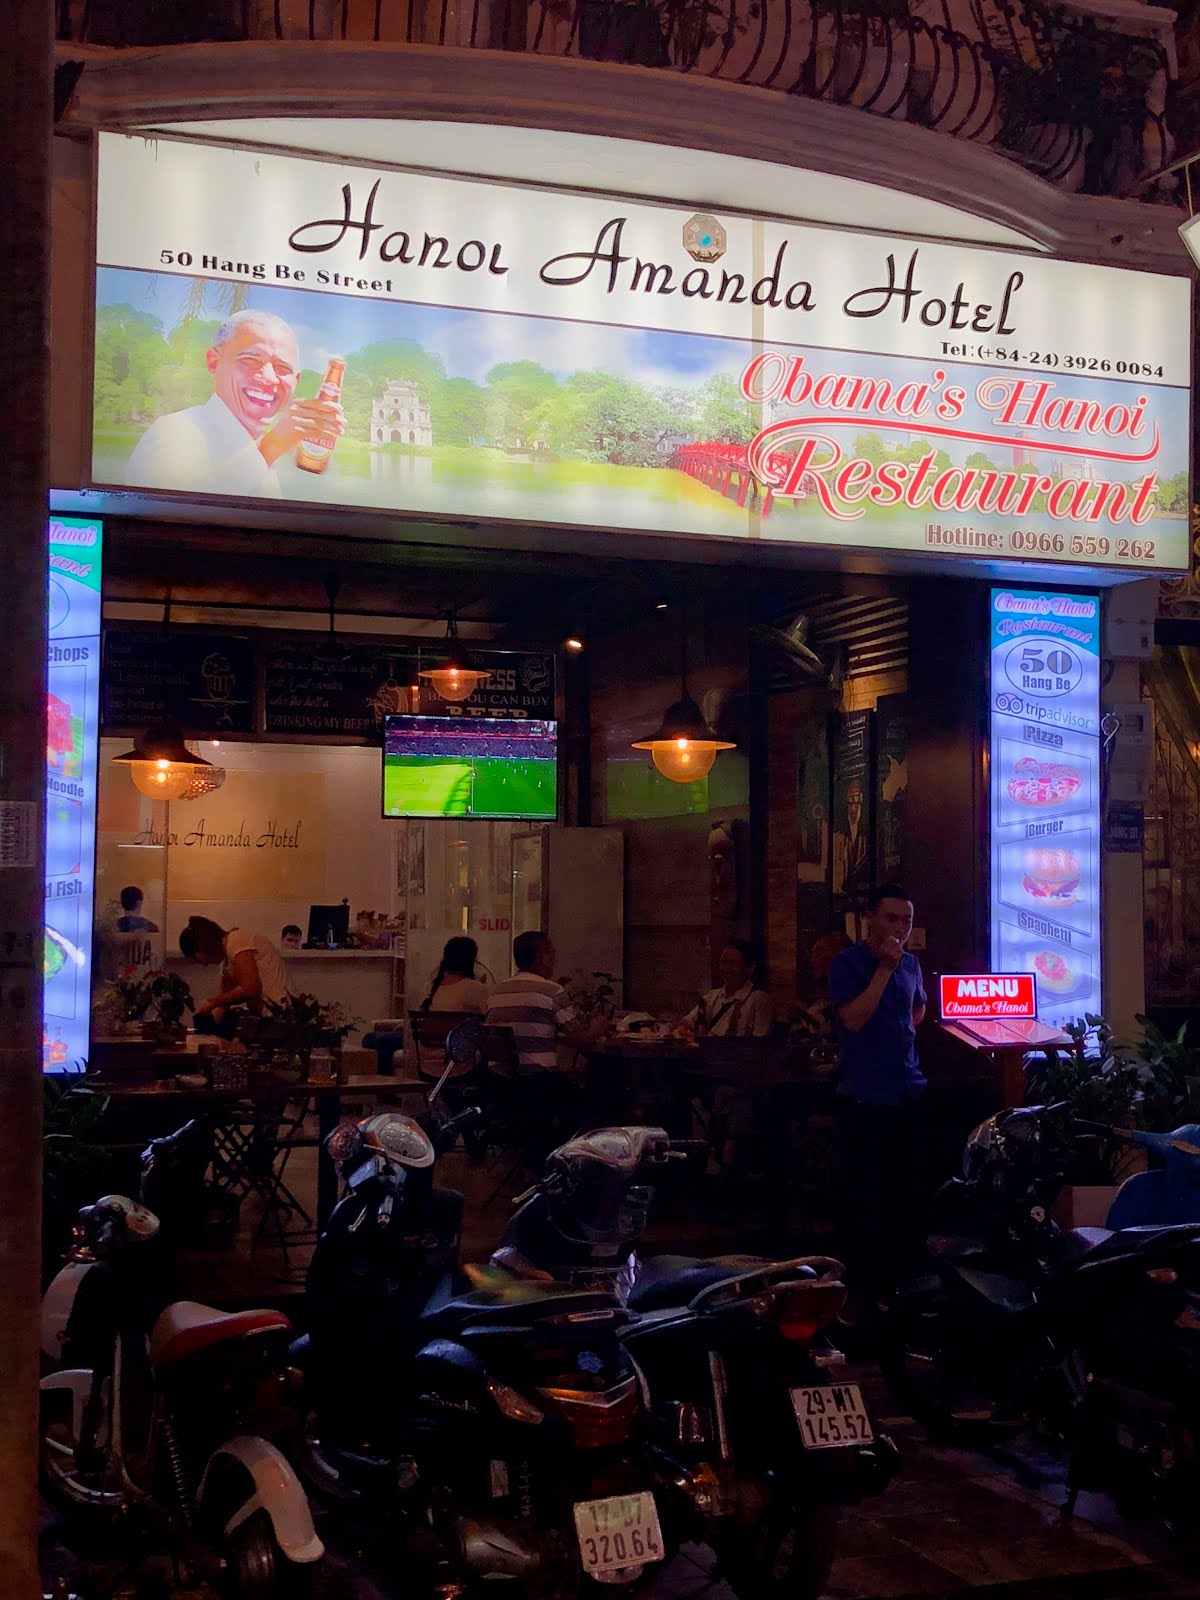 Obama's Hanoi Restaurant